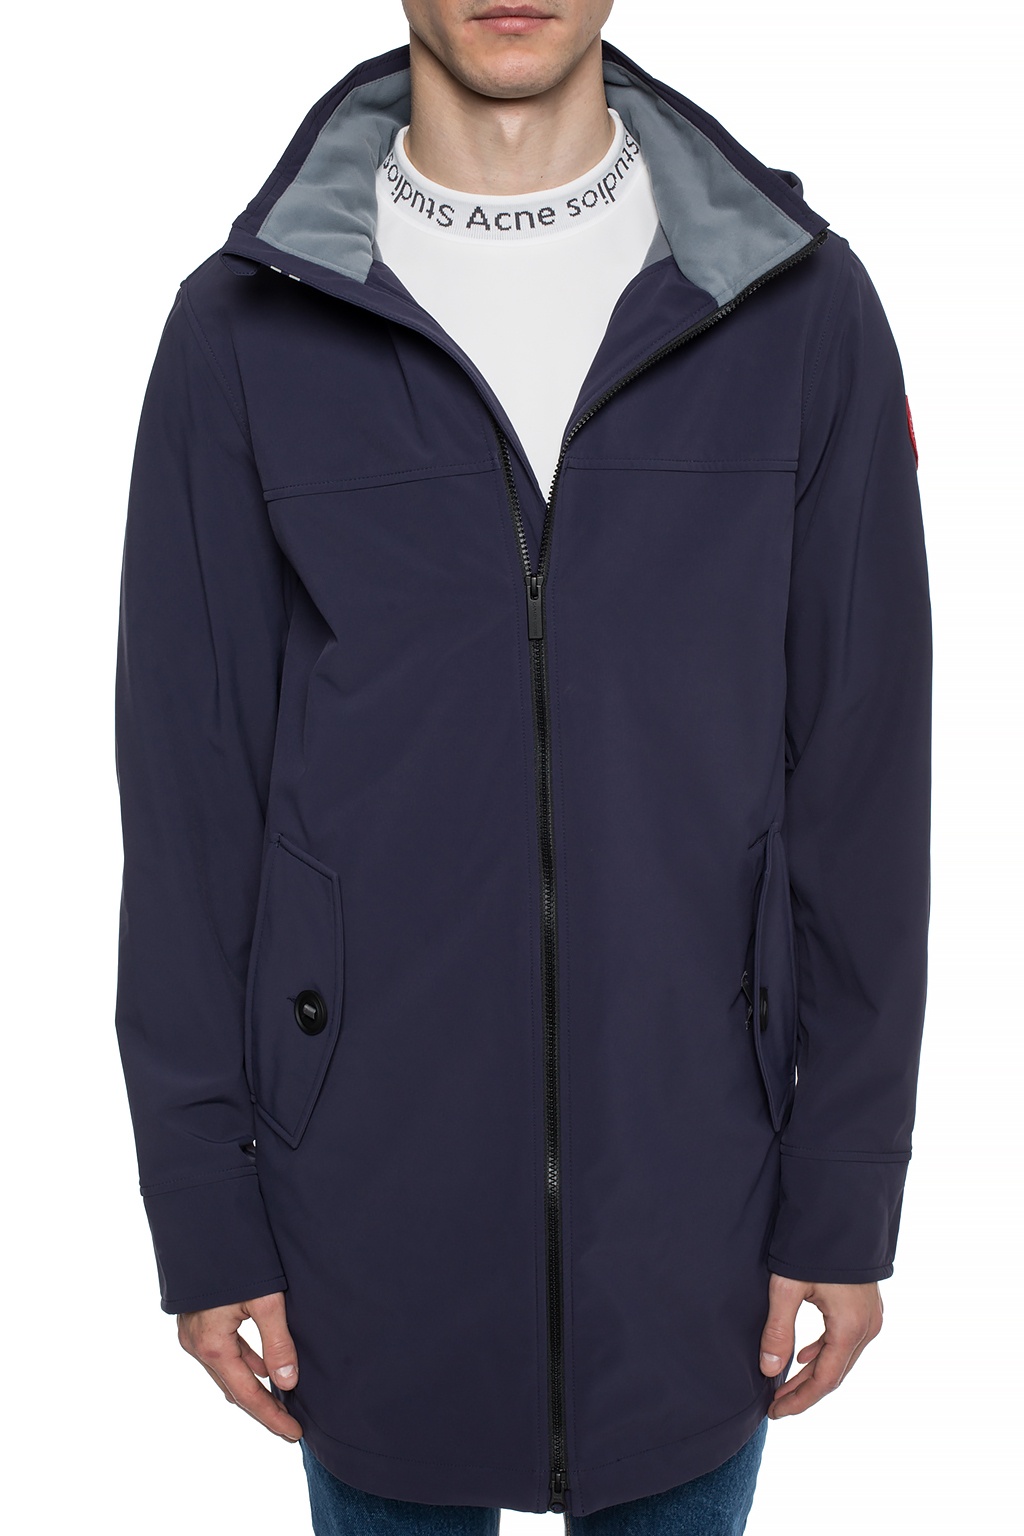 Canada Goose ‘Kent’ hooded jacket